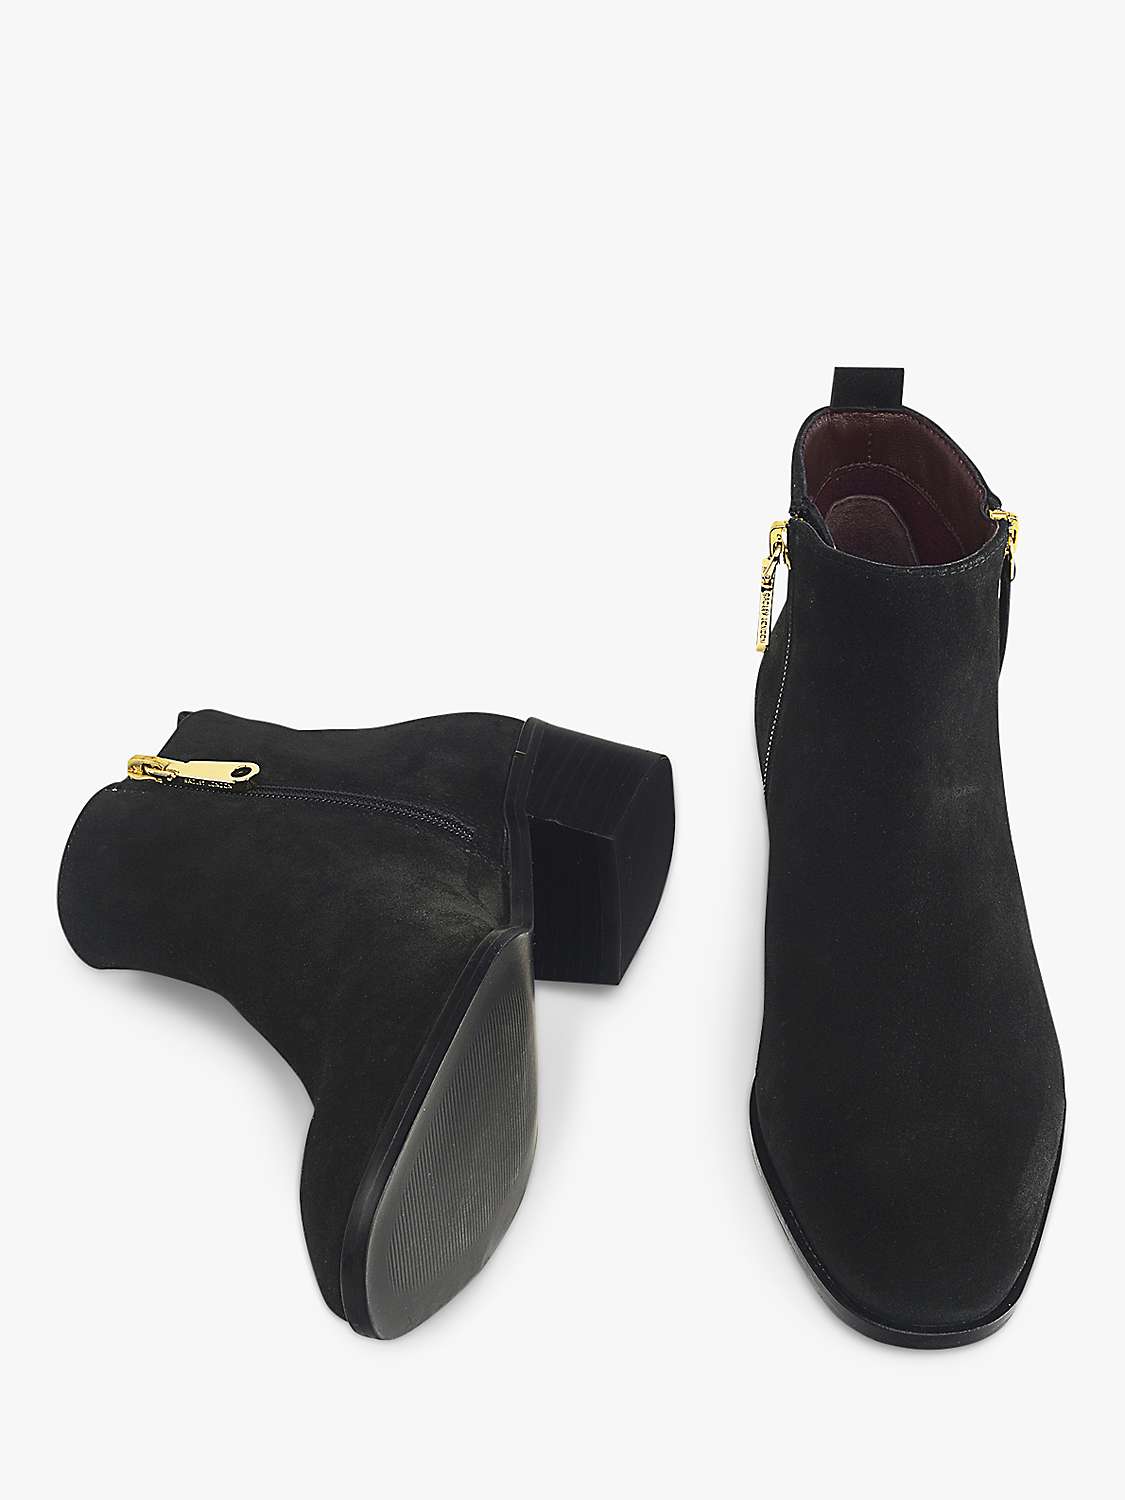 Buy Radley Sloane Gardens Suede Ankle Boots Online at johnlewis.com